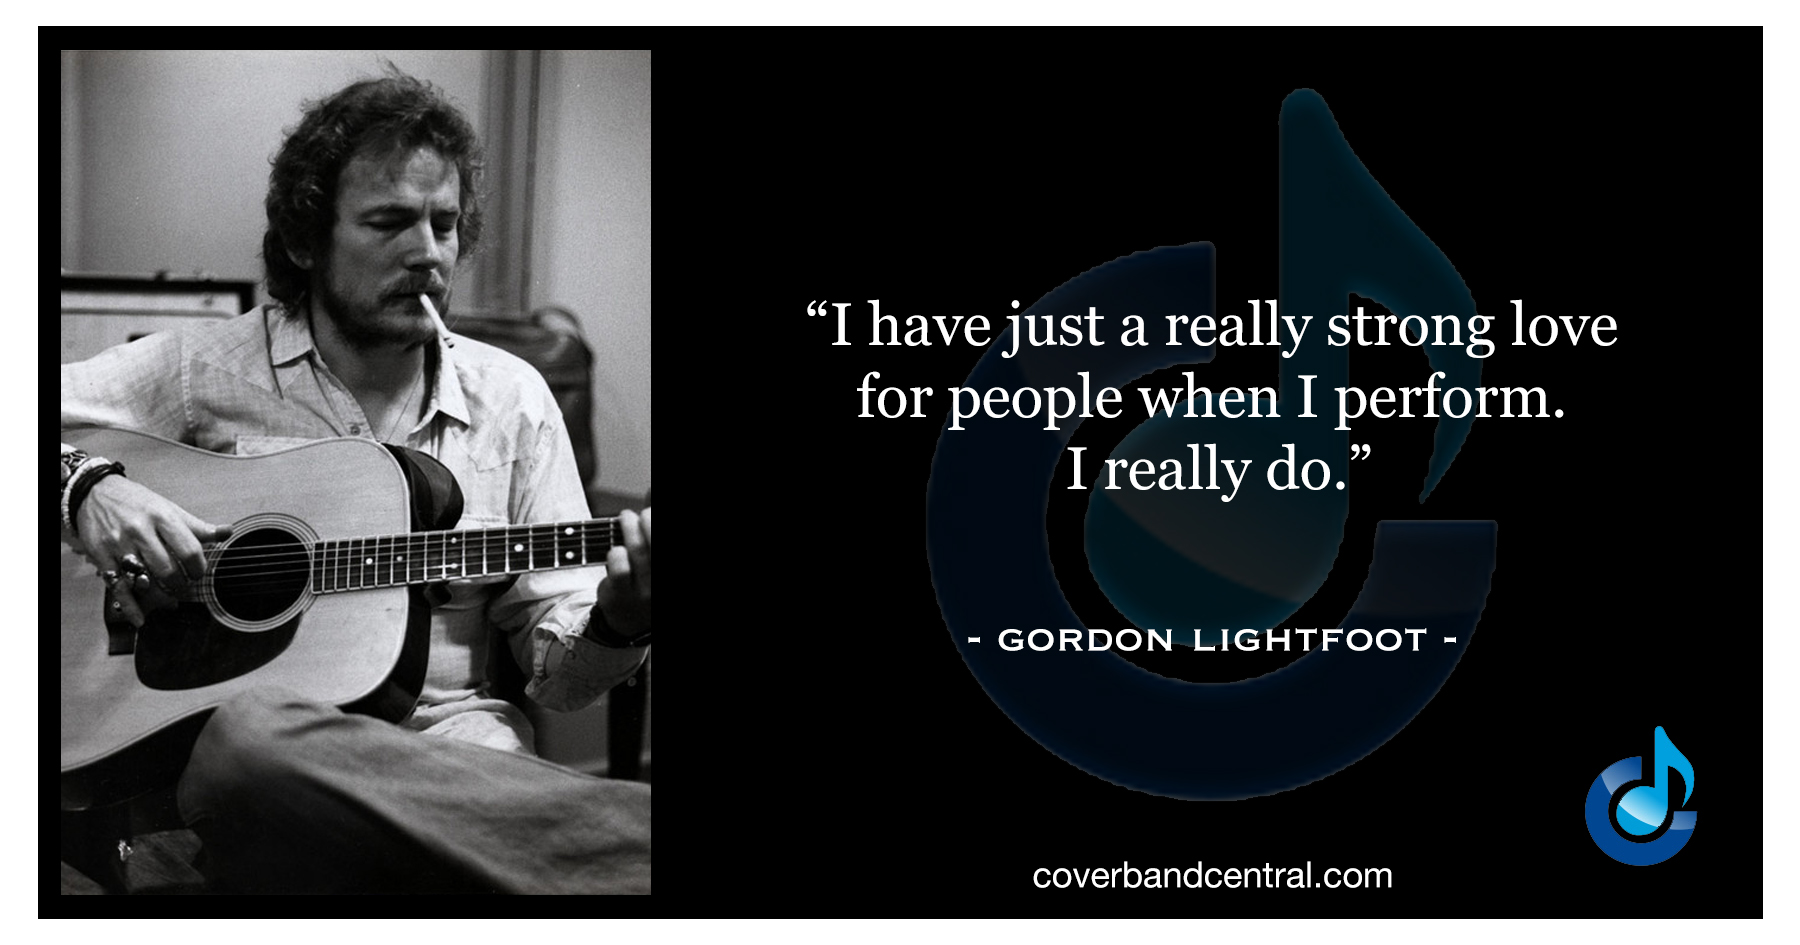 Gordon Lightfoot quote